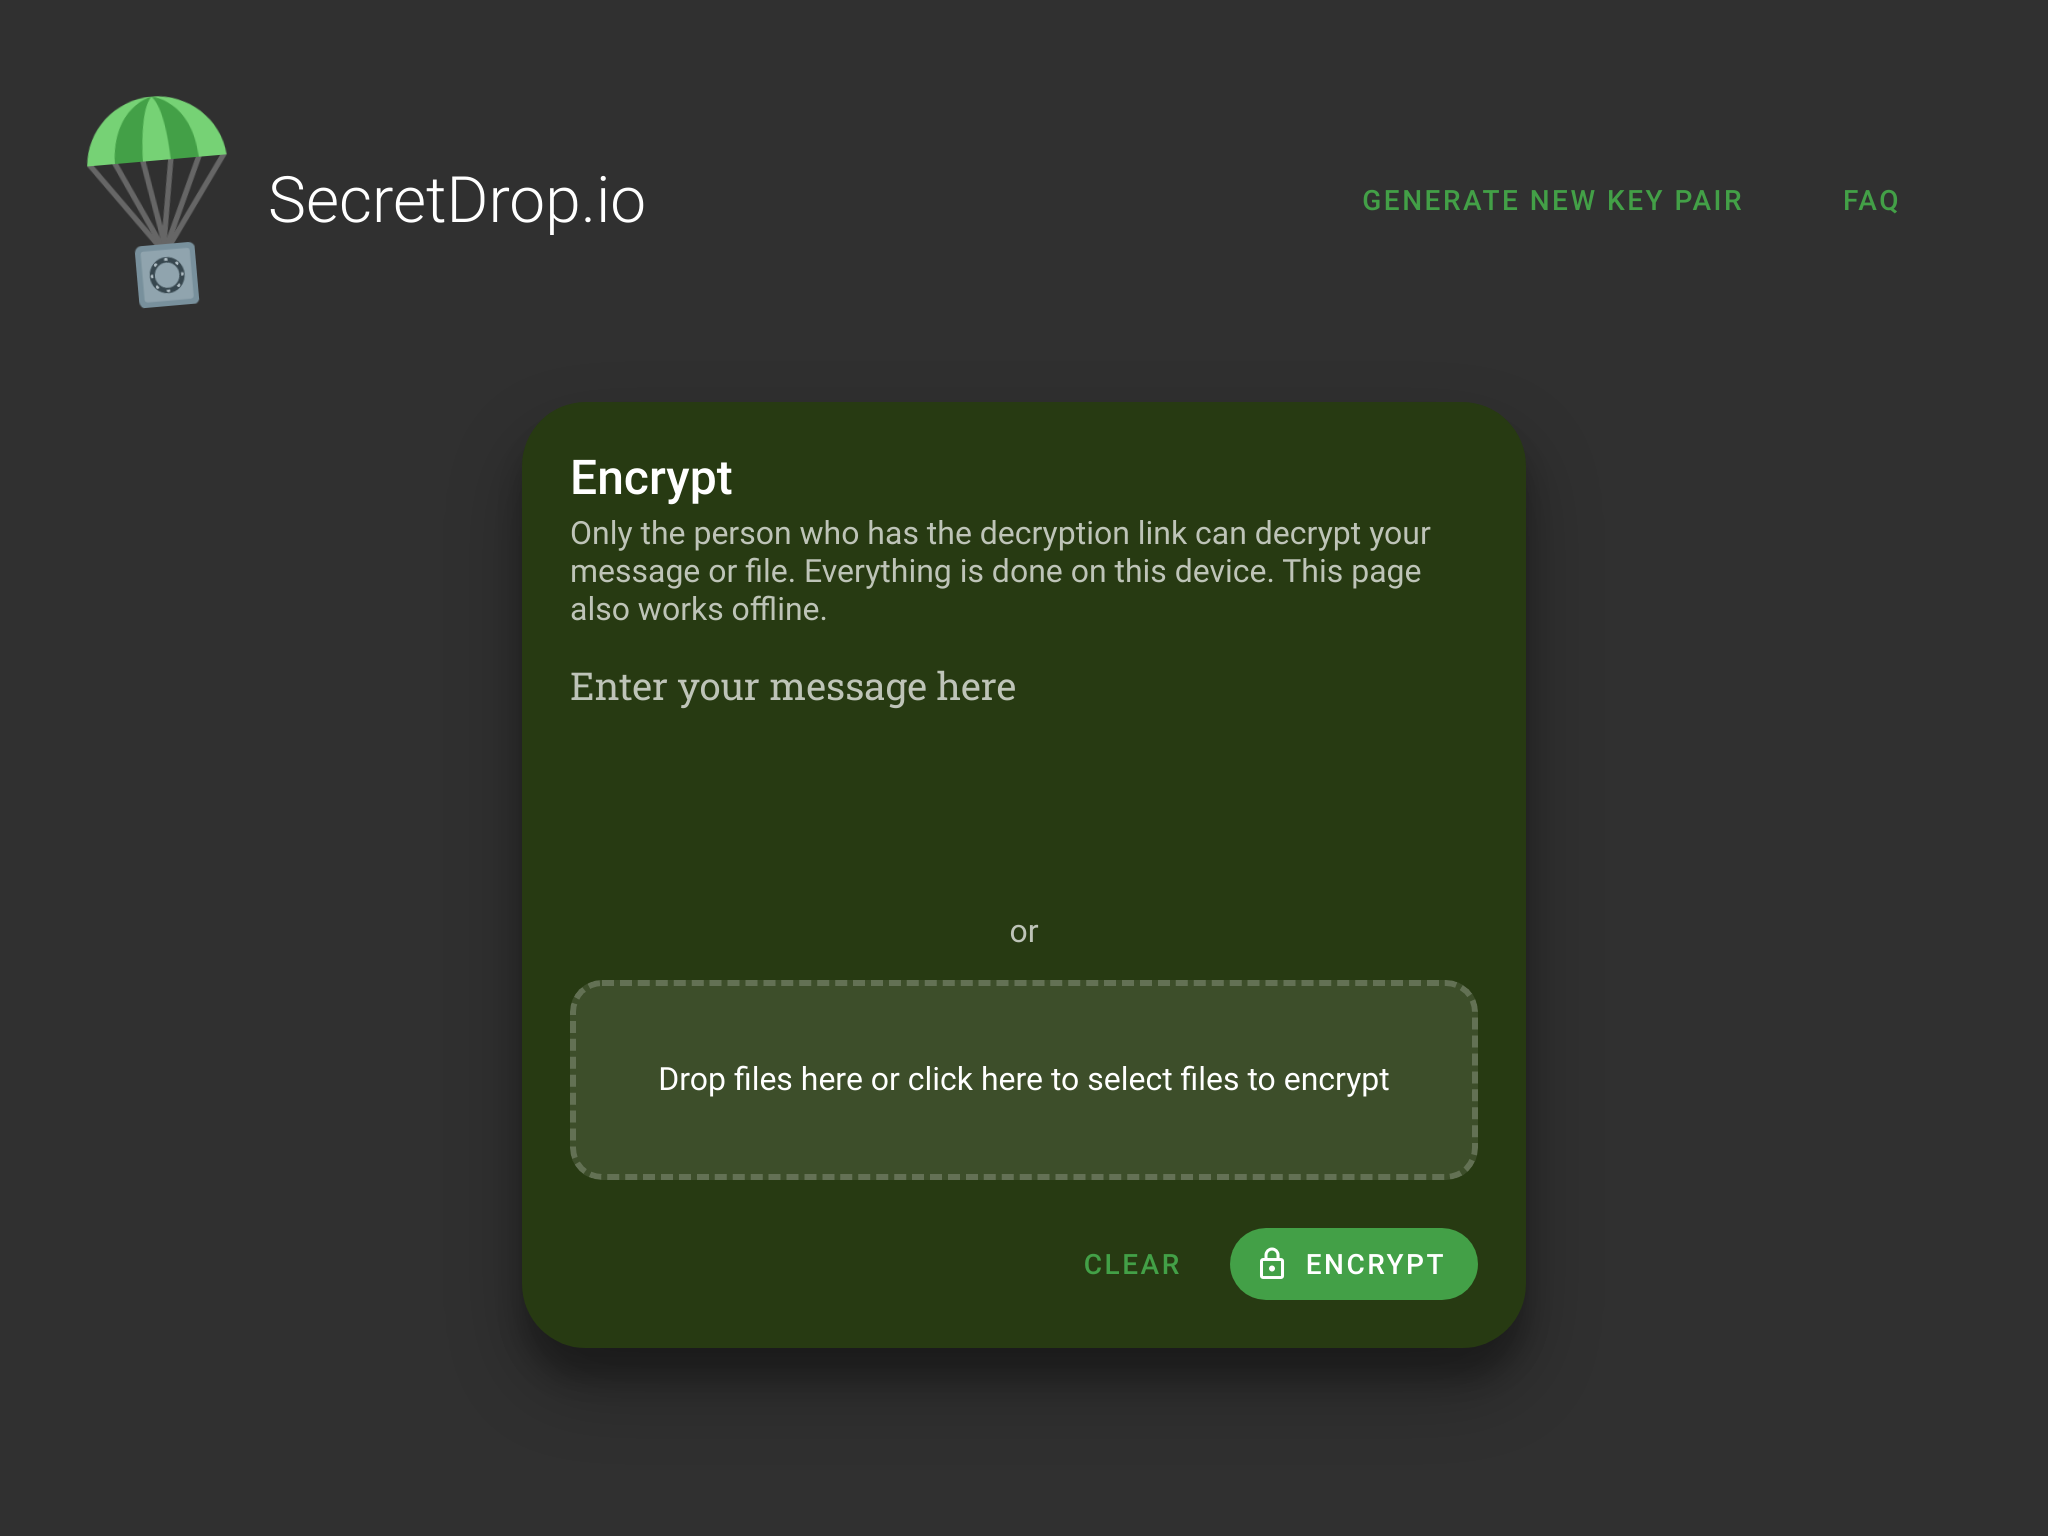 main-test-ts-encrypt-decrypt-encrypt-page-file-encryption-screenshot-1024-768-0-snap.png